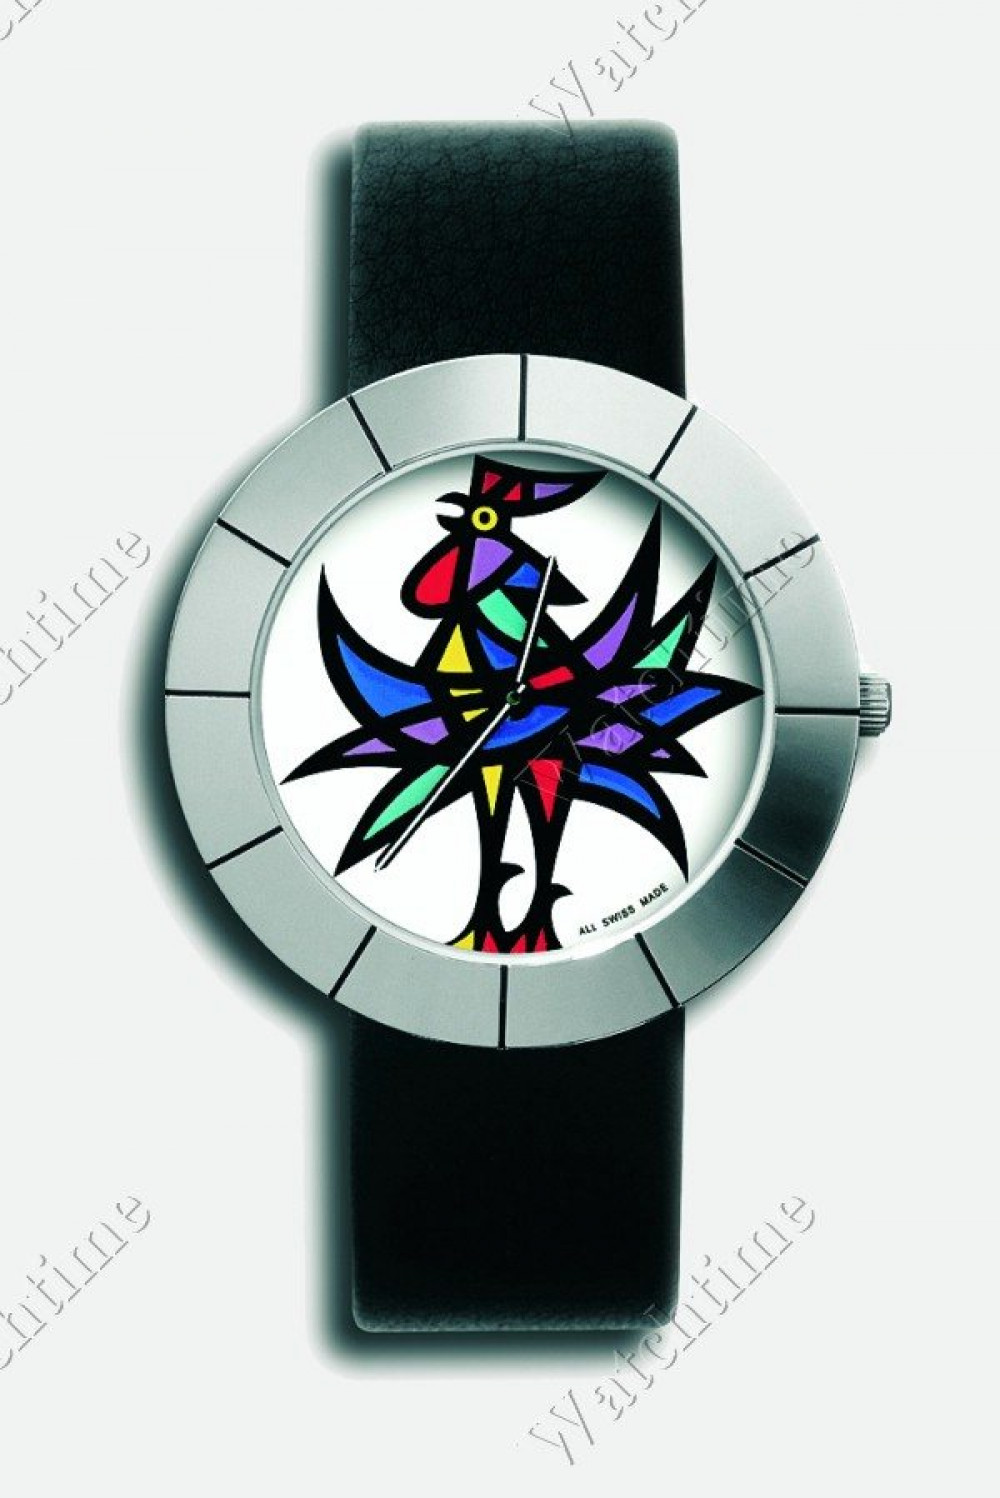 Zegarek firmy Sunvision-Artwatches, model Piatt- Hahn